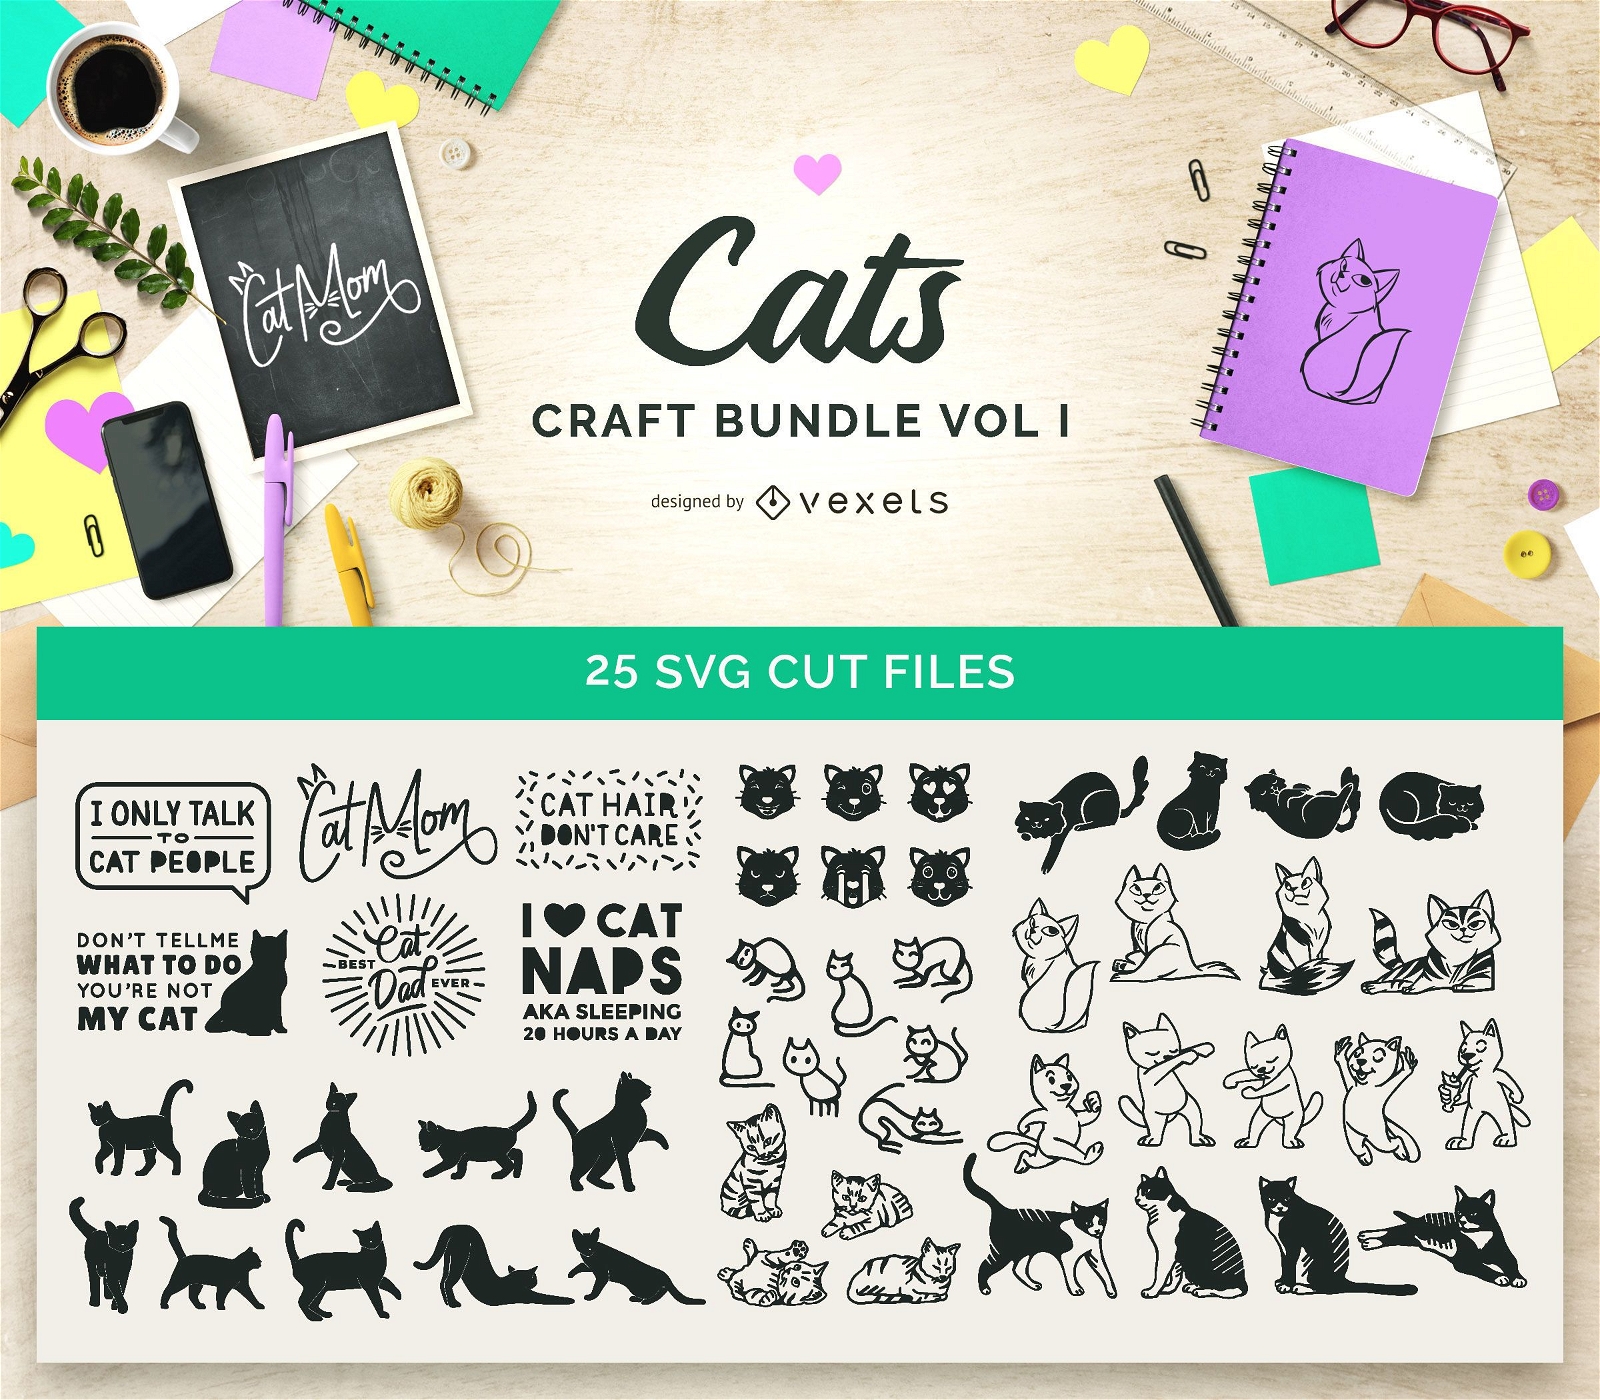 Pacote Cats Craft Vol I